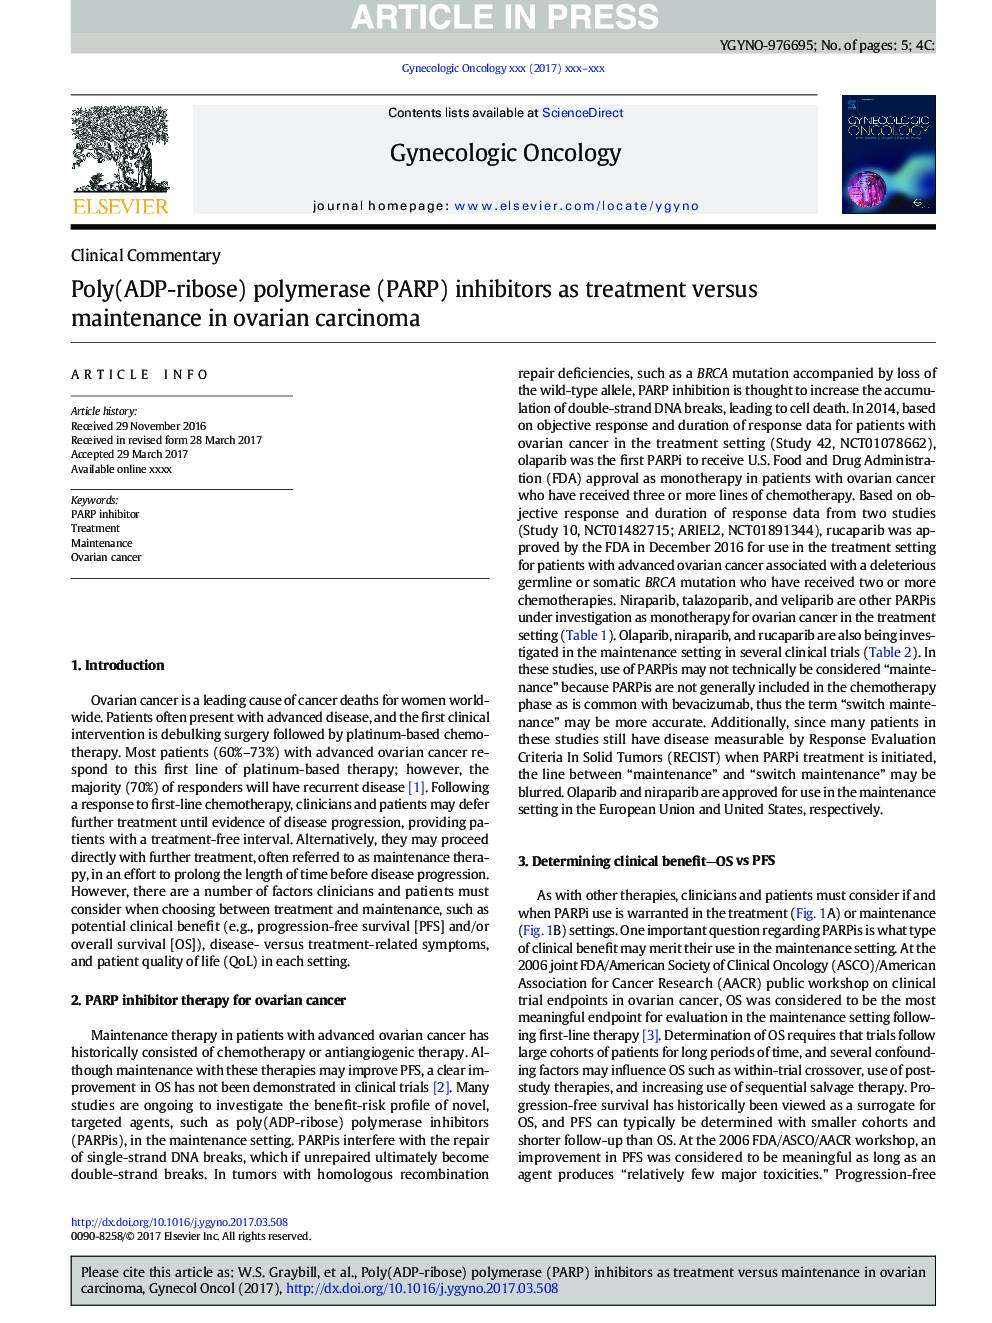 Poly(ADP-ribose) polymerase (PARP) inhibitors as treatment versus maintenance in ovarian carcinoma